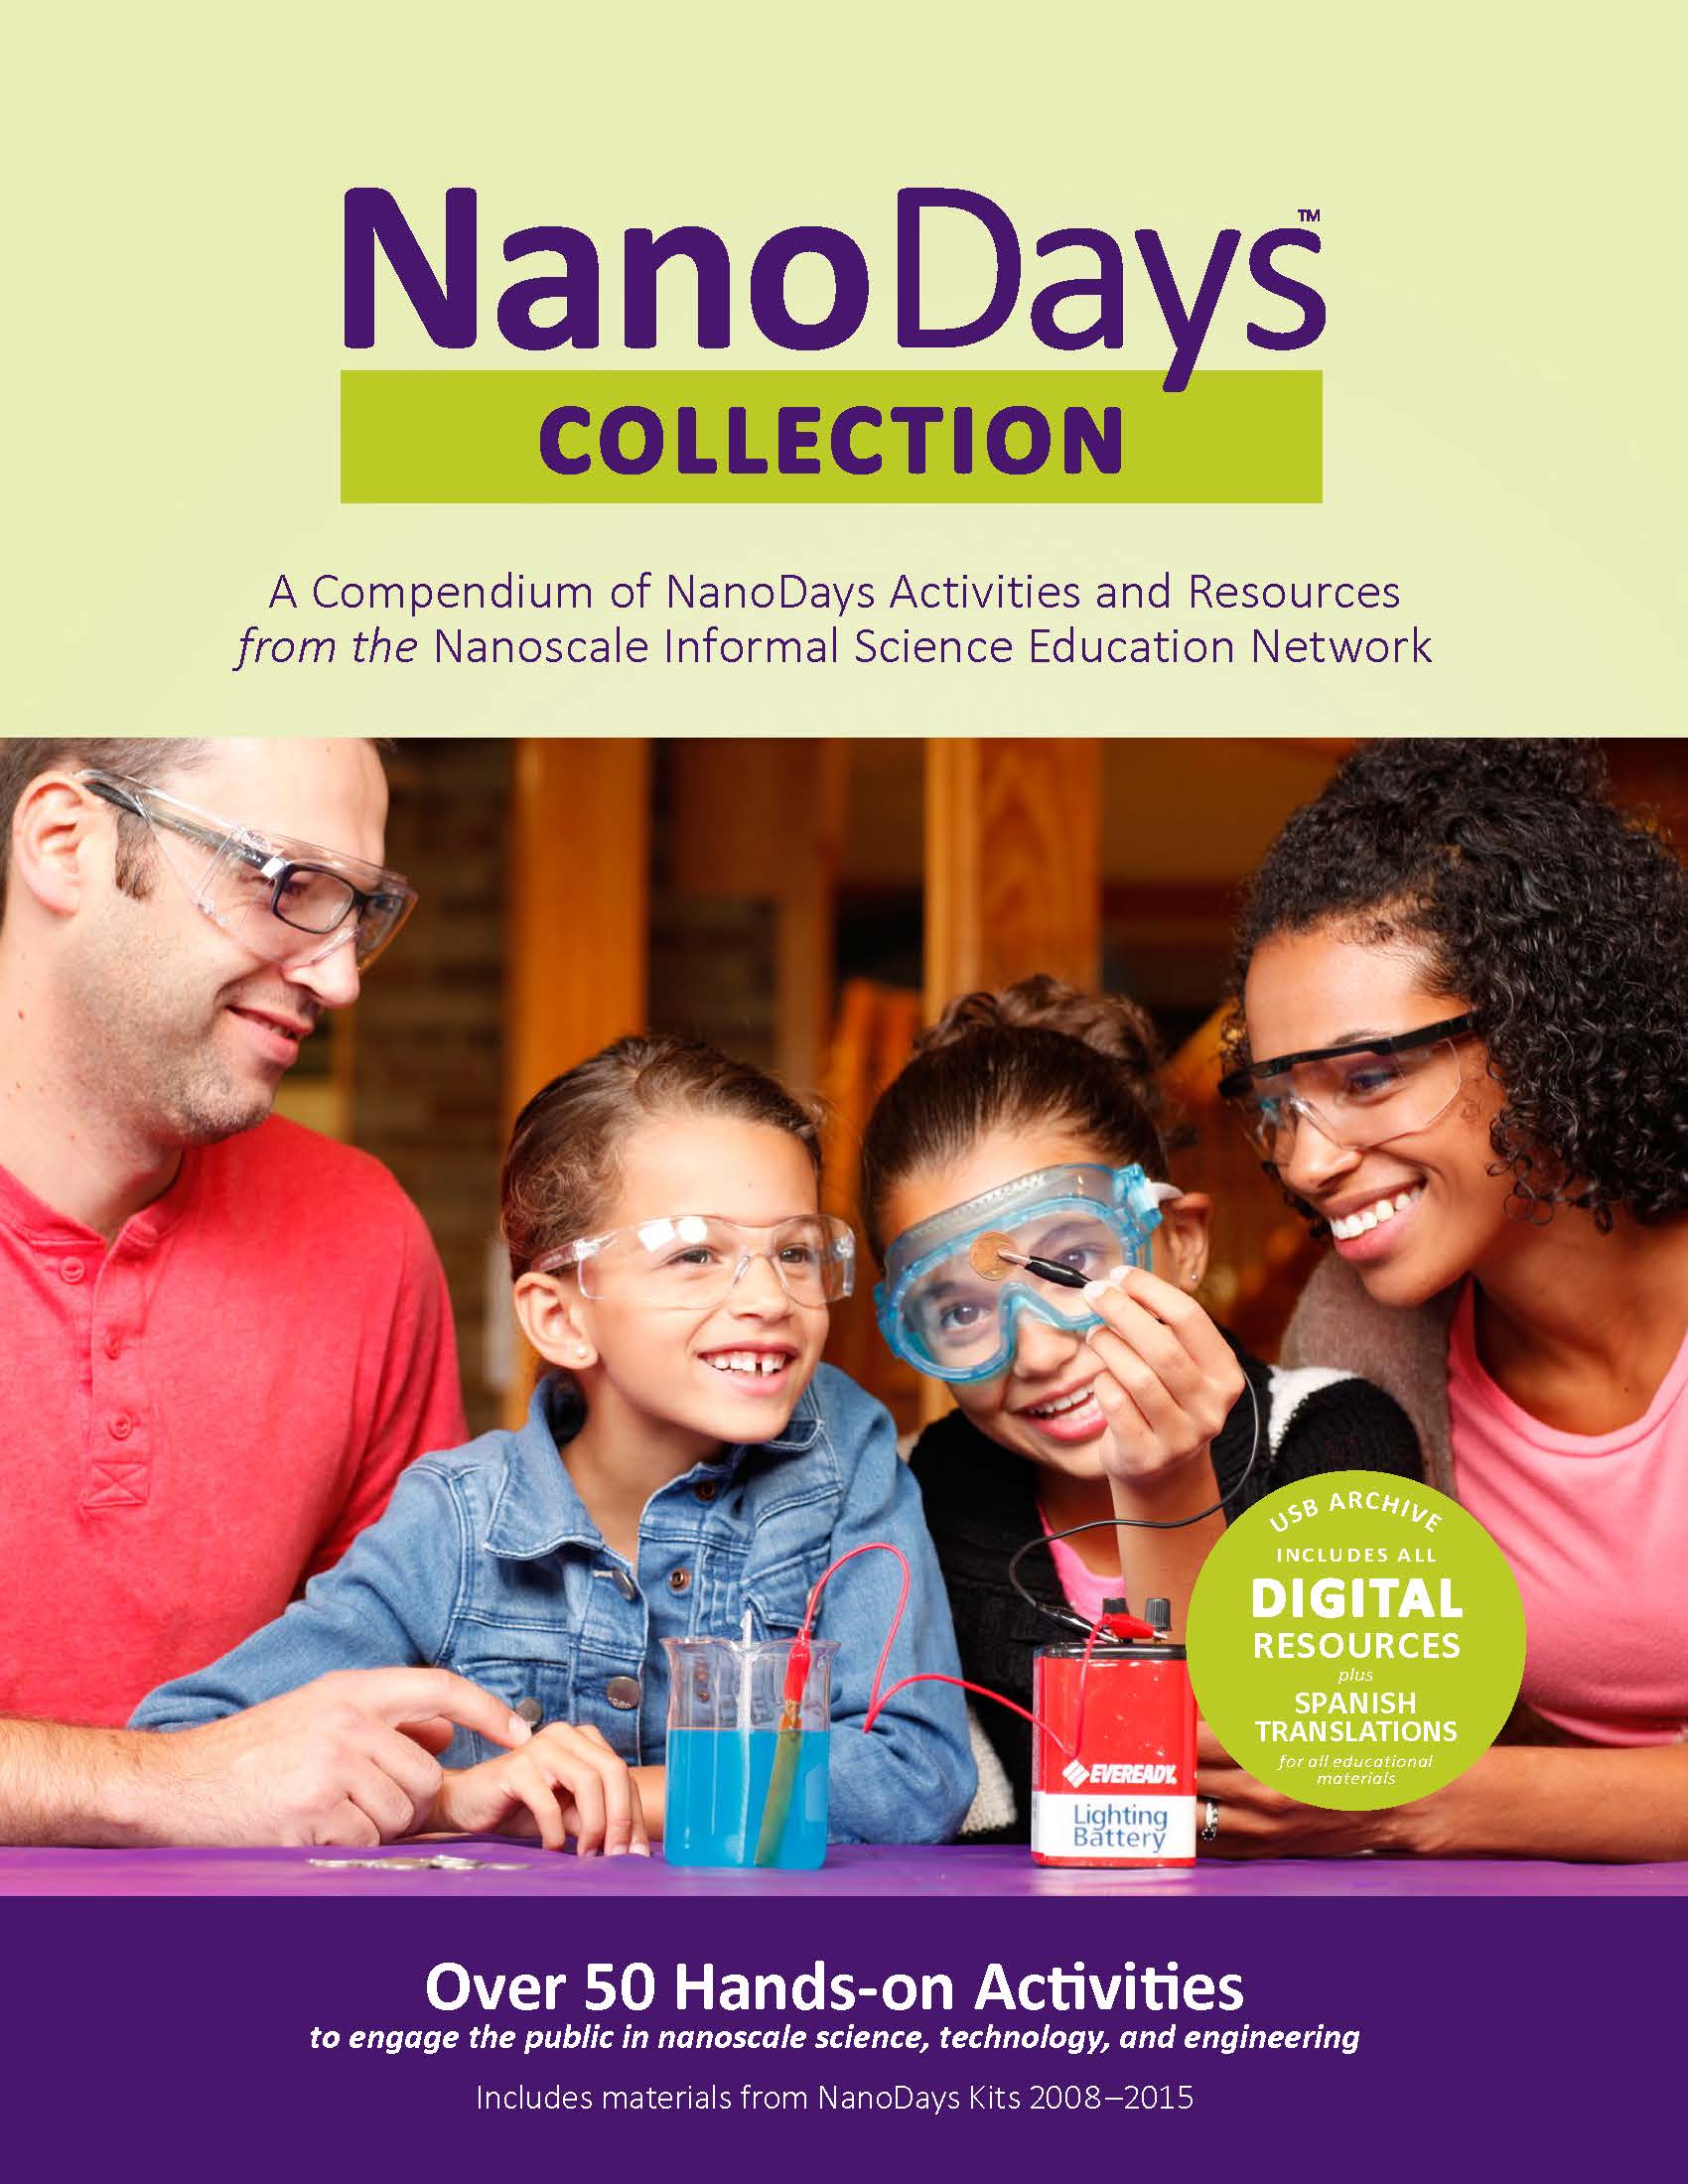 NanoDays Collection compendum cover